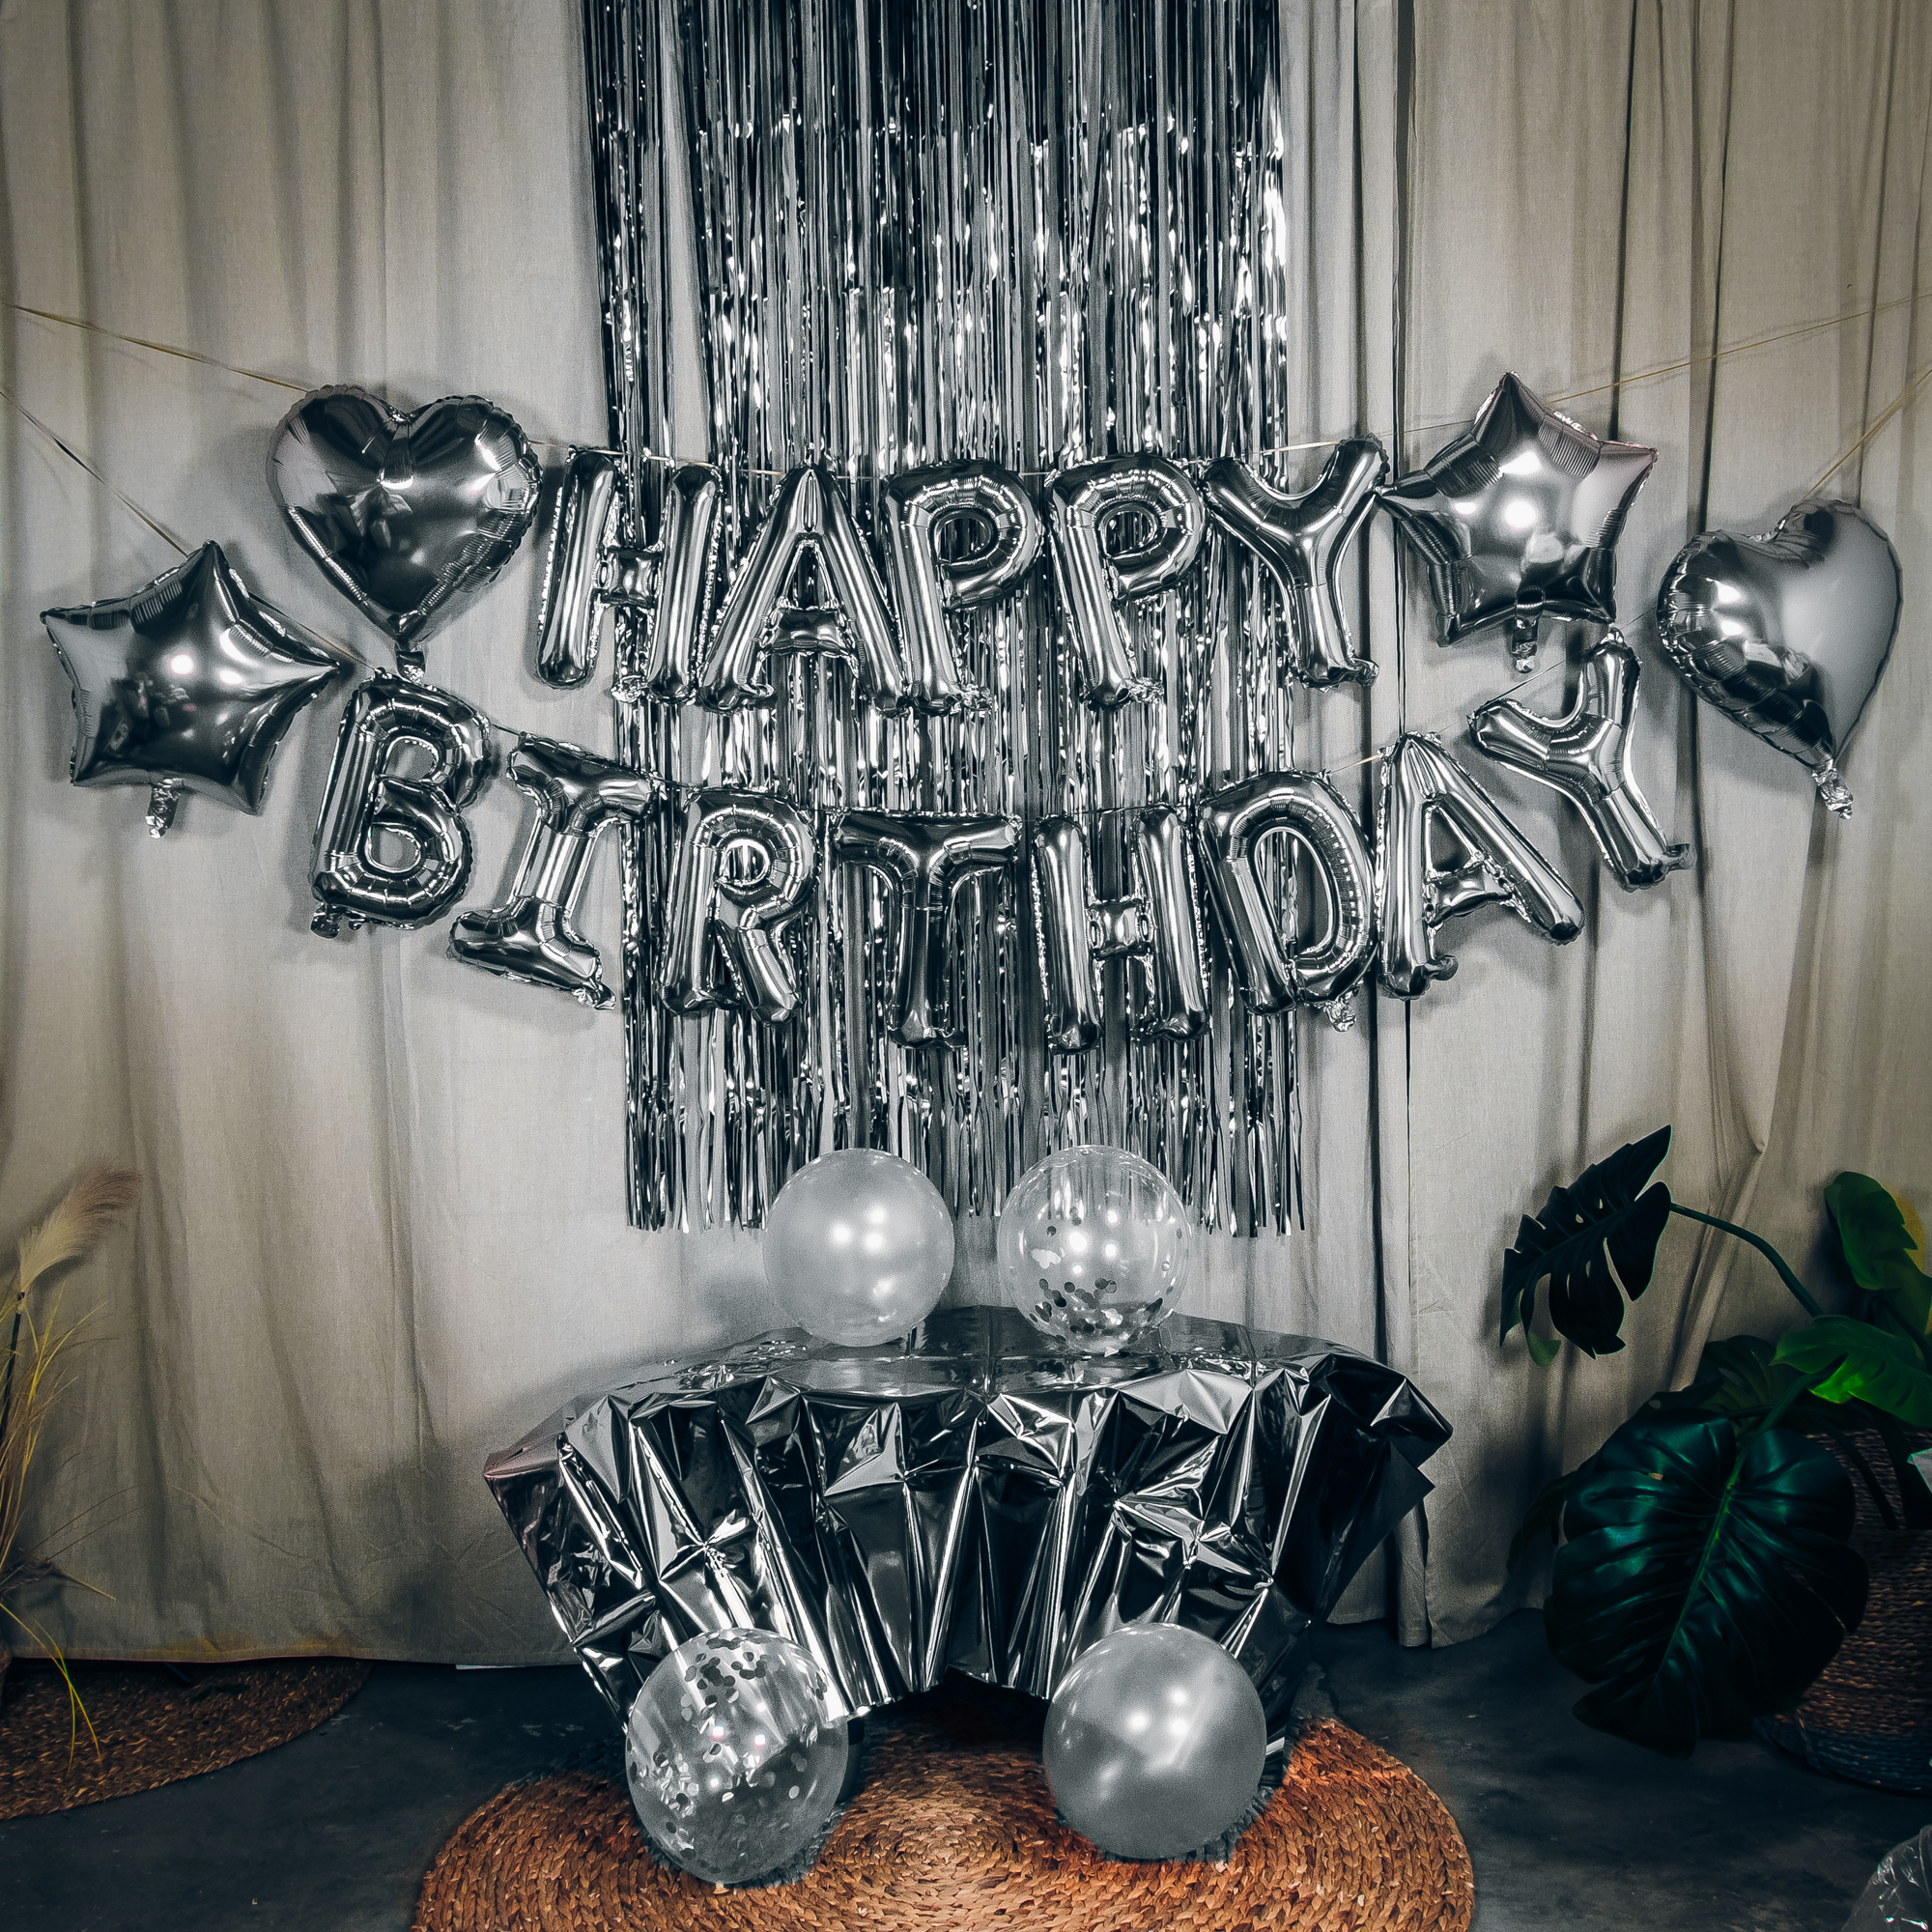 45pcs Happy Birthday Tassel & Balloon Combo Set (Rose Gold/Silver) - Children | Adult | Party | Decoration